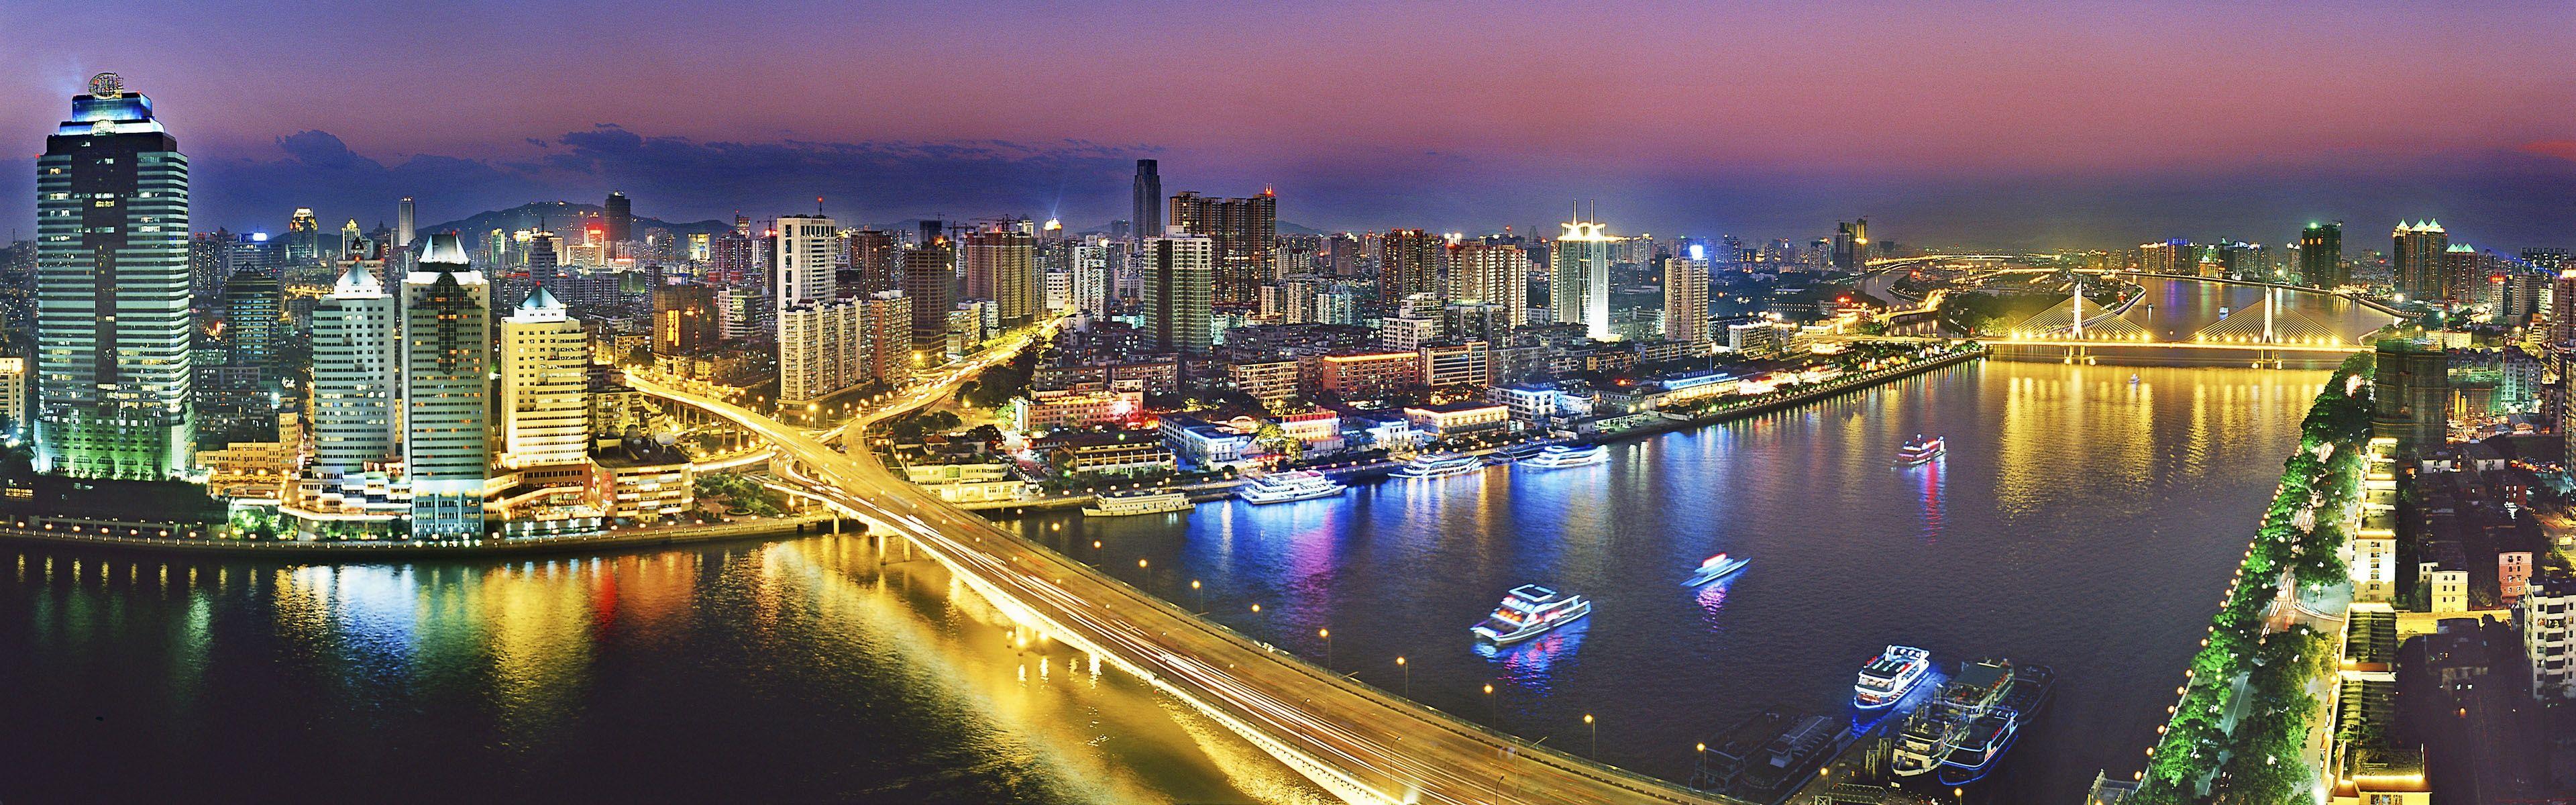 Urban NightLife Guangzhou China Wallpaper in jpg format for free